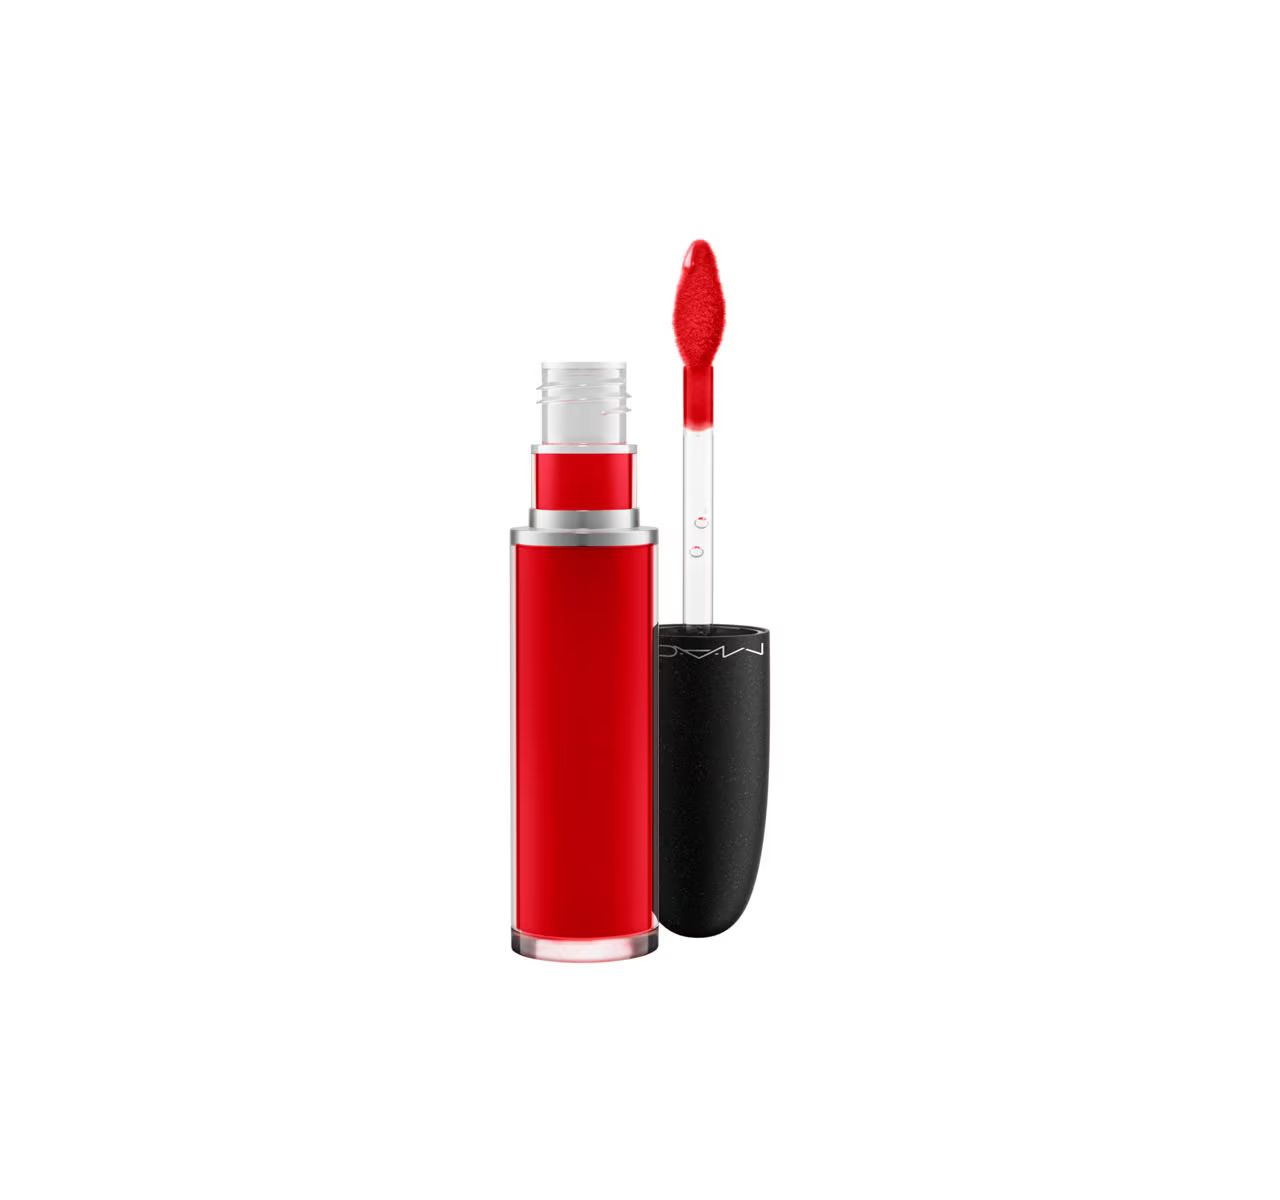 Retro Matte Liquid Lipcolour | MAC Cosmetics - Official Site | MAC Cosmetics (US)